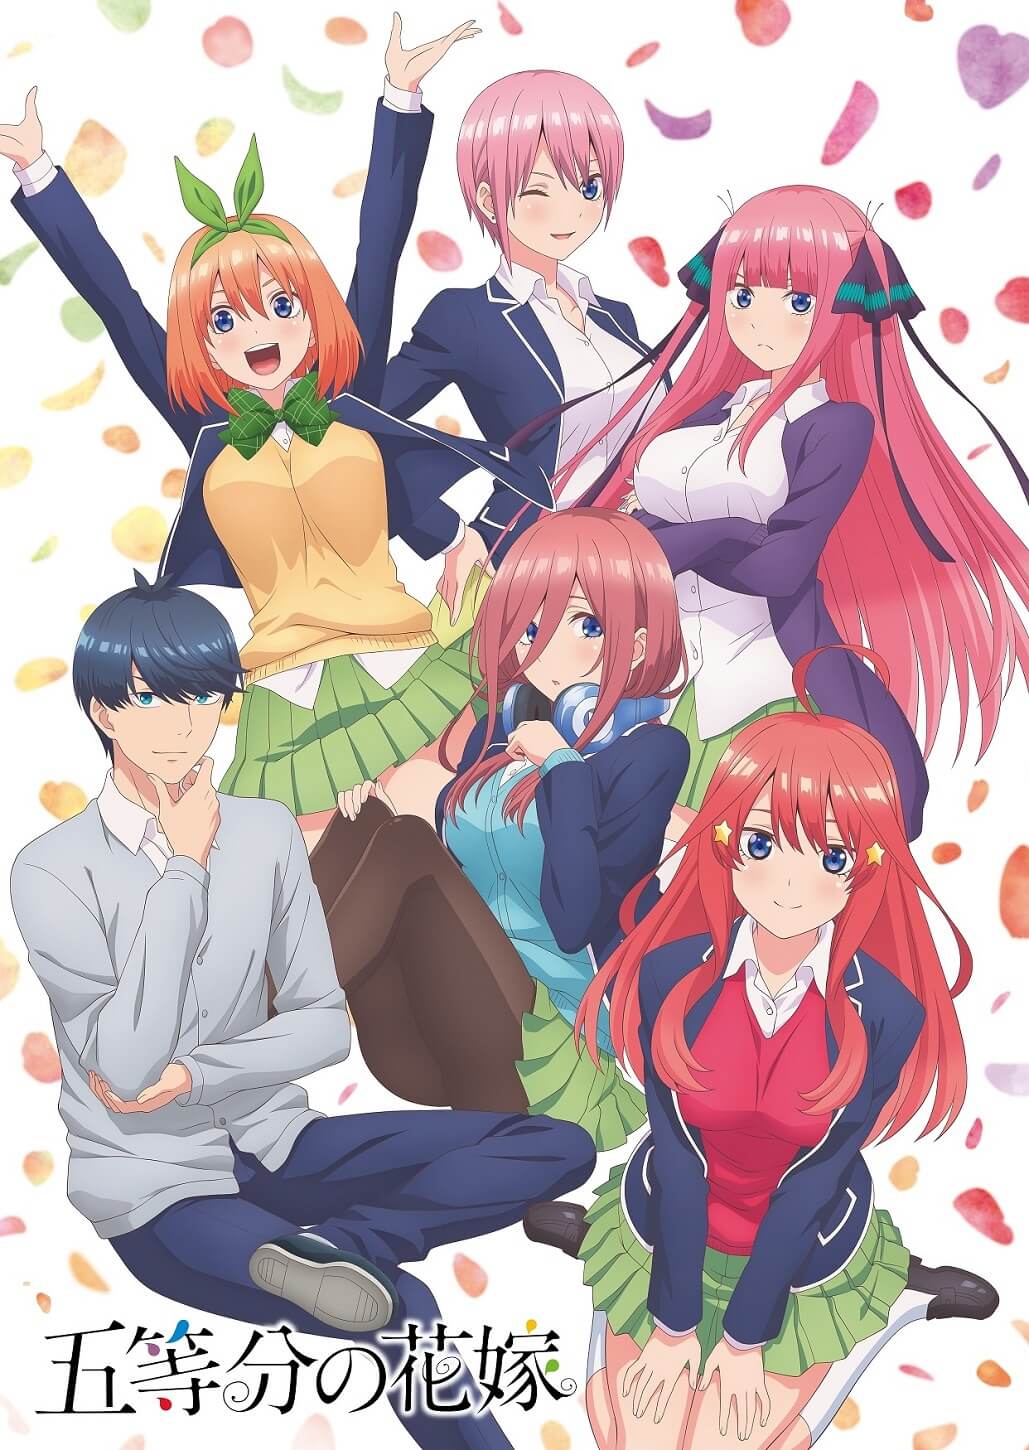 Anime: The Quintessential Quintuplets – Characters: Nino / Miku / Itsuki /  Ichika / Yotsuba • Millions of uniq…